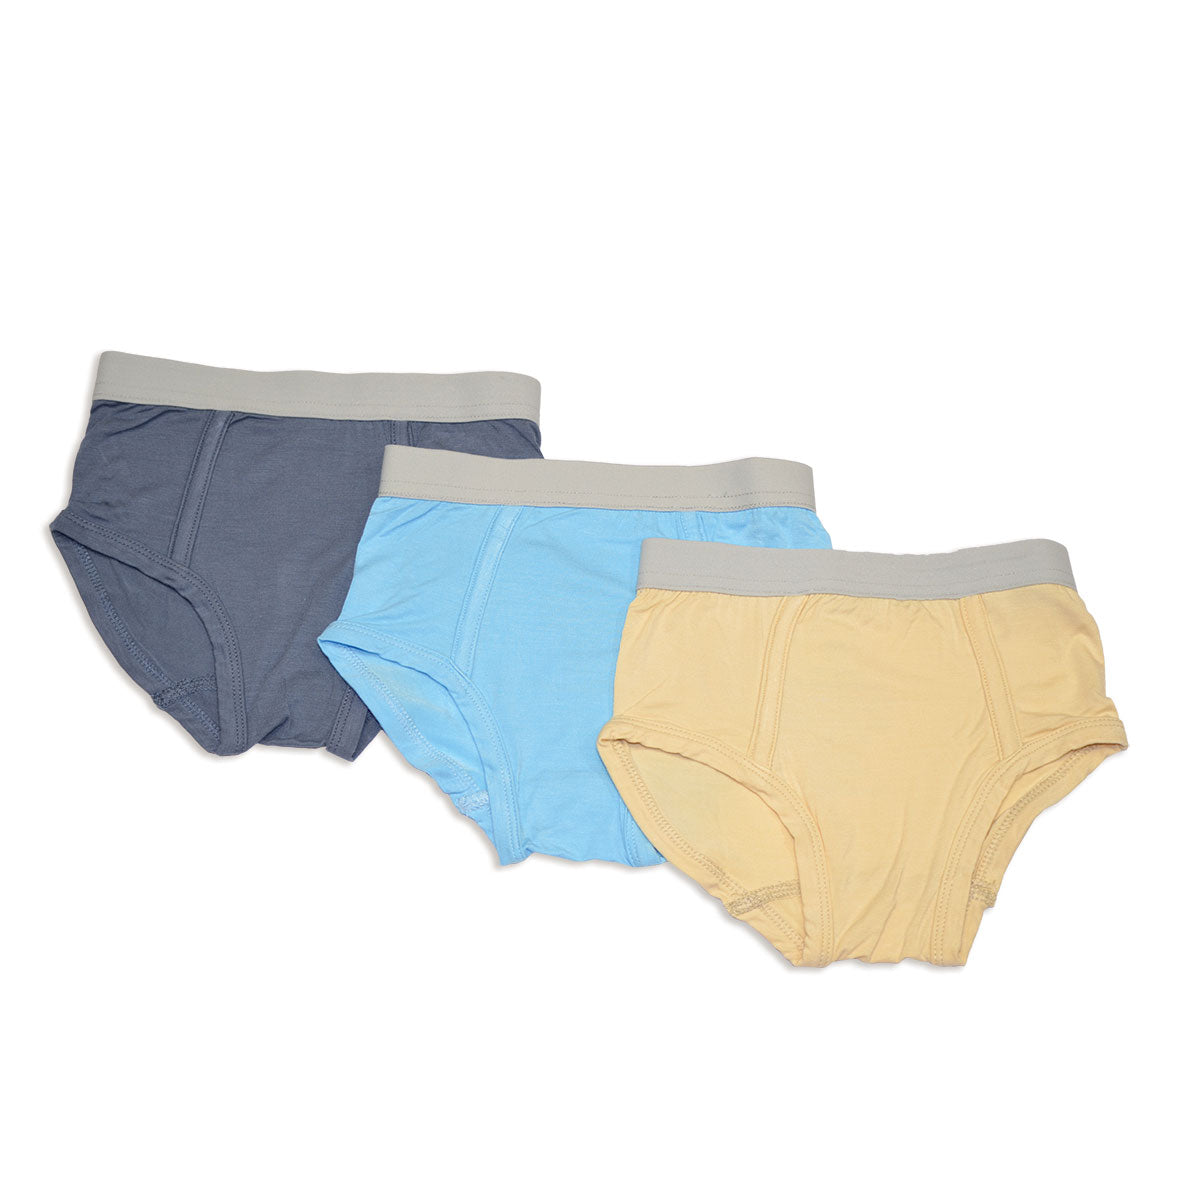  Underwear For Baby Boygilsbloomer For Baby Boy Pack Of